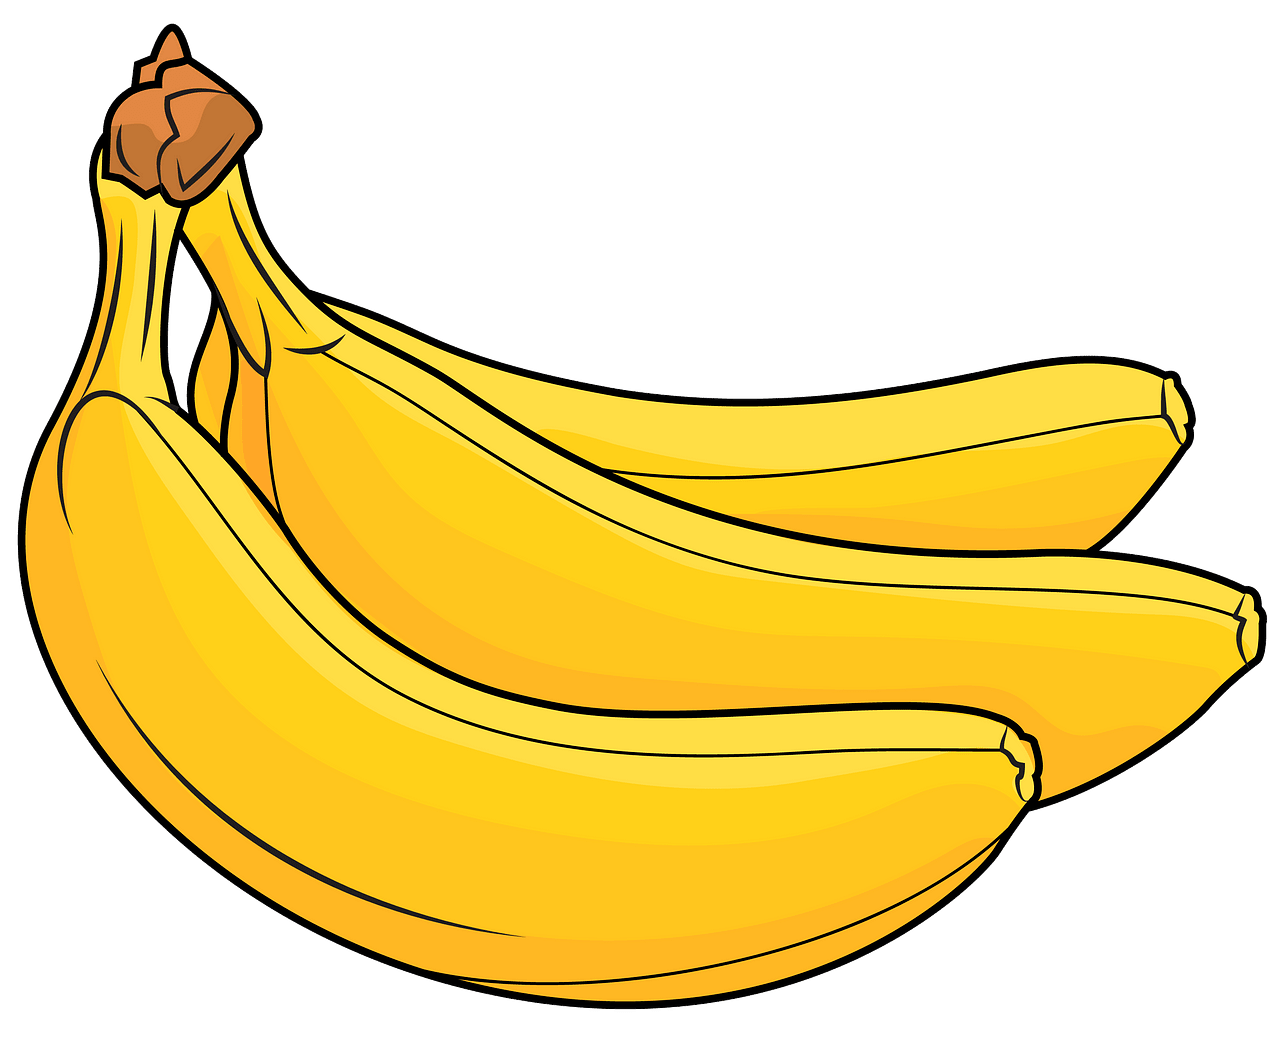 Bananas clipart free.